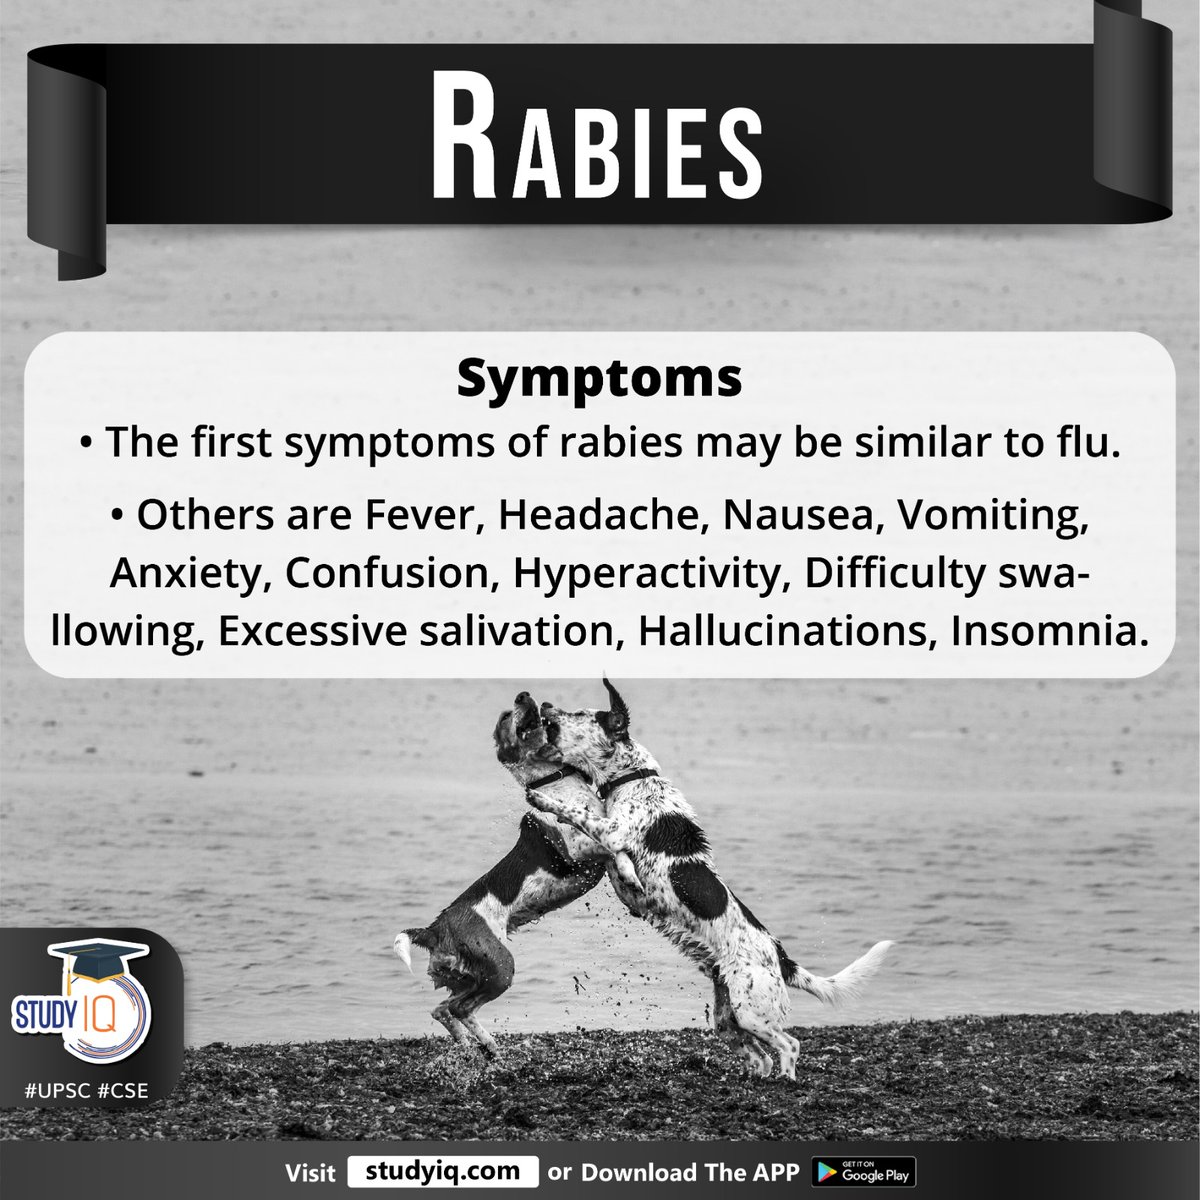 Rabies

#rabies #healthministry #loksabha #delhi #whyinnews #deathsduetorabies #zoonotic #centralnervoussystem #rabiesvirus #rnavirus #rhabdovirdaefamily #rabidanimals #domesticdogs #humans #headache #nausea #vomiting #hallucinations #insomnia #upsc #cse #ips #ias